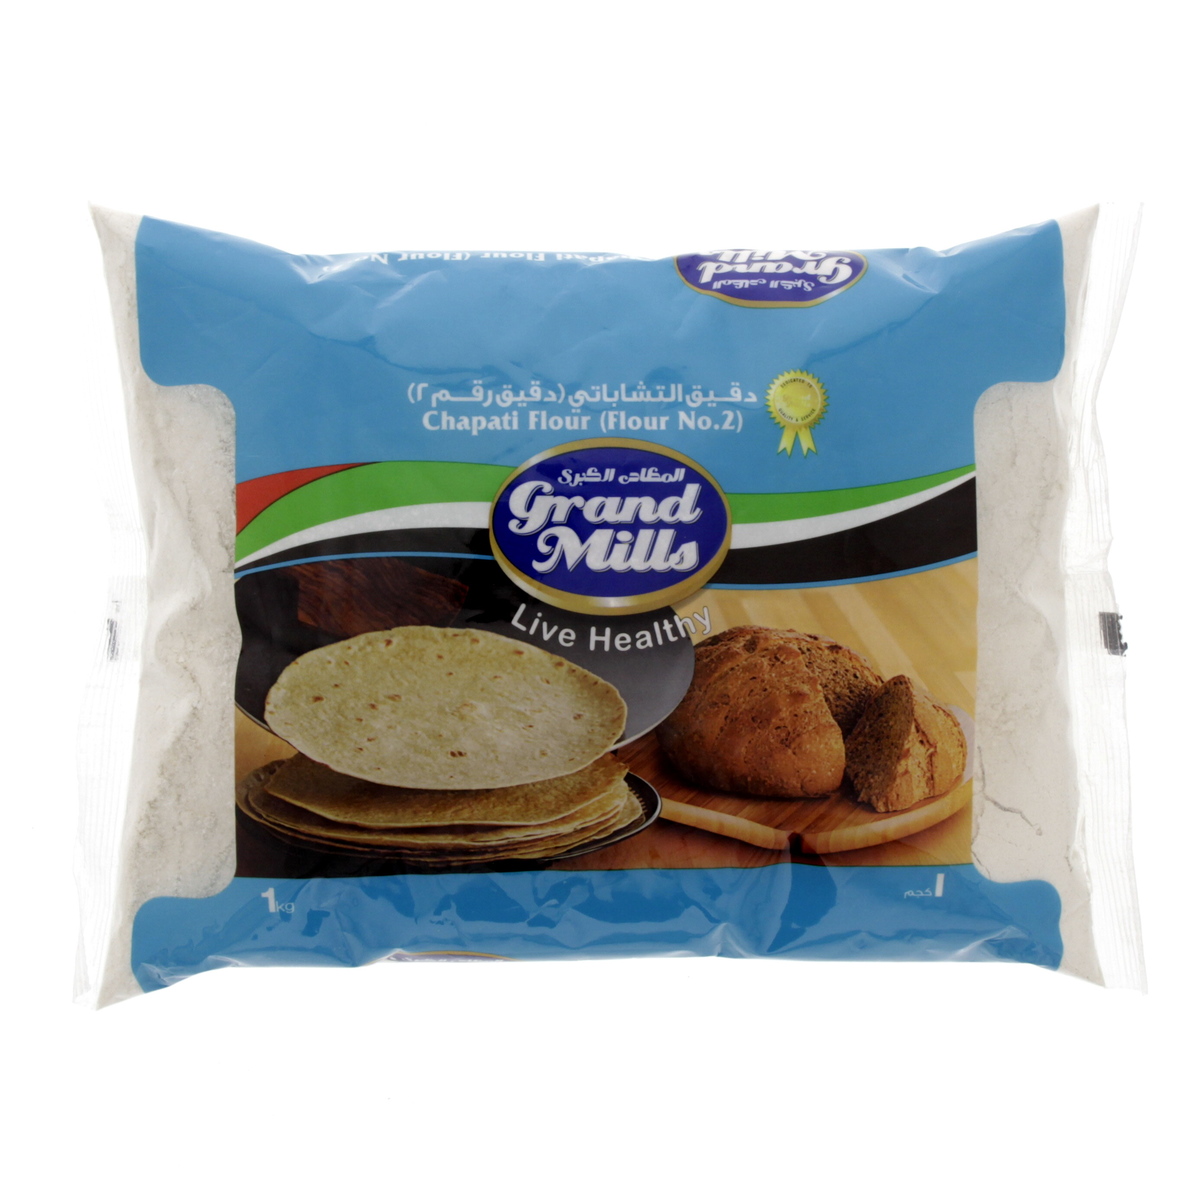 Grand Mills Chapati (Flour Flour No:2) 1 Kg